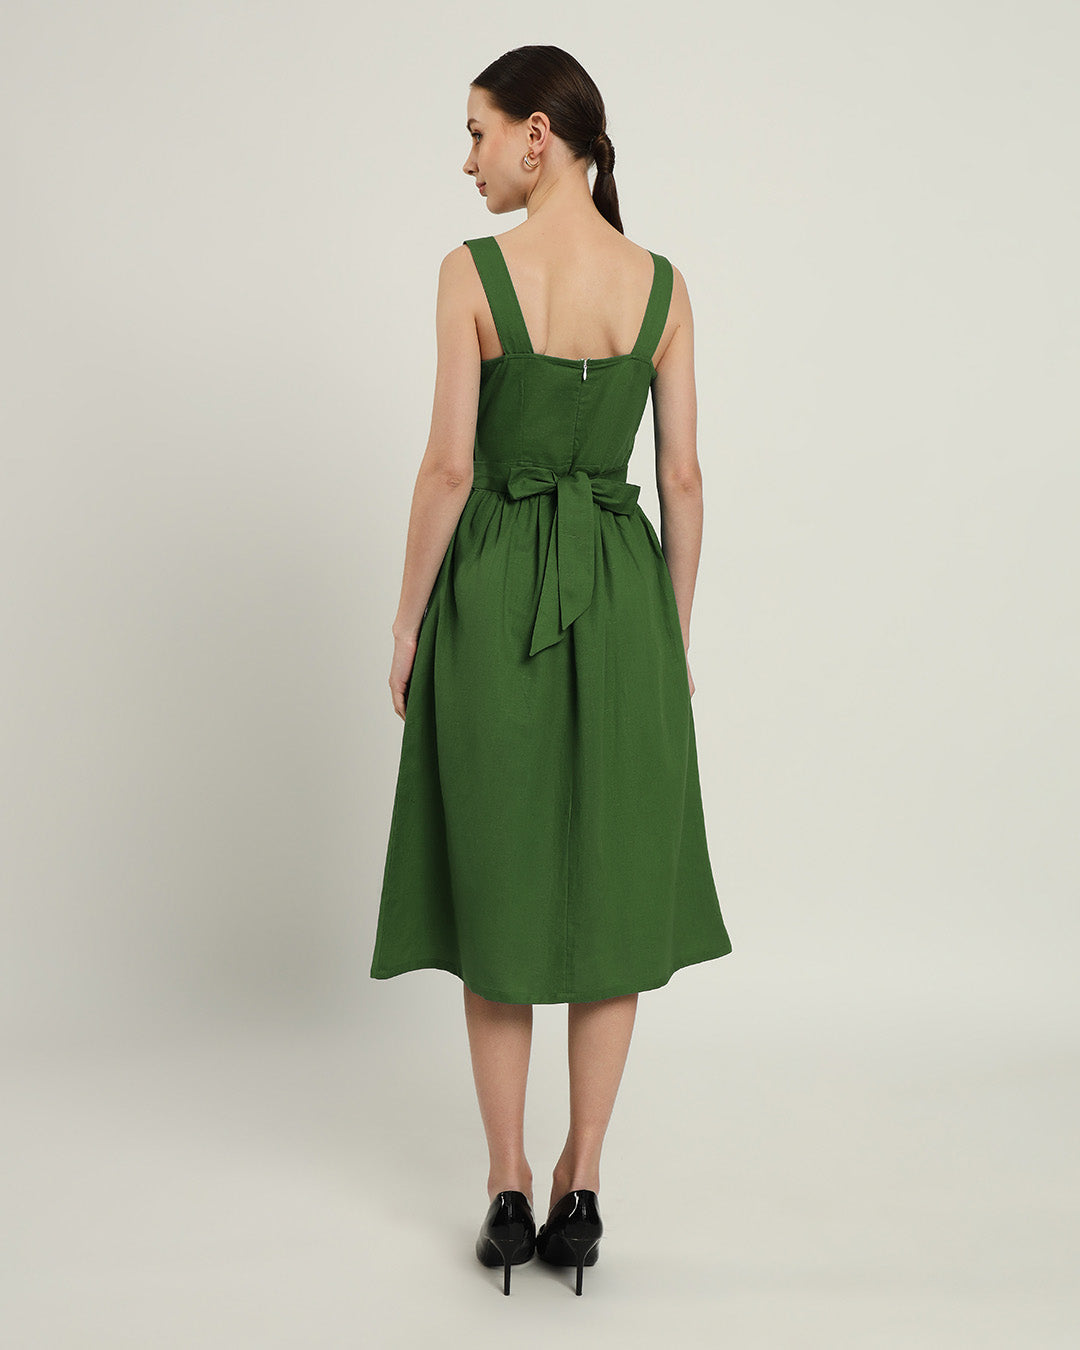 The Mihara Emerald Dress